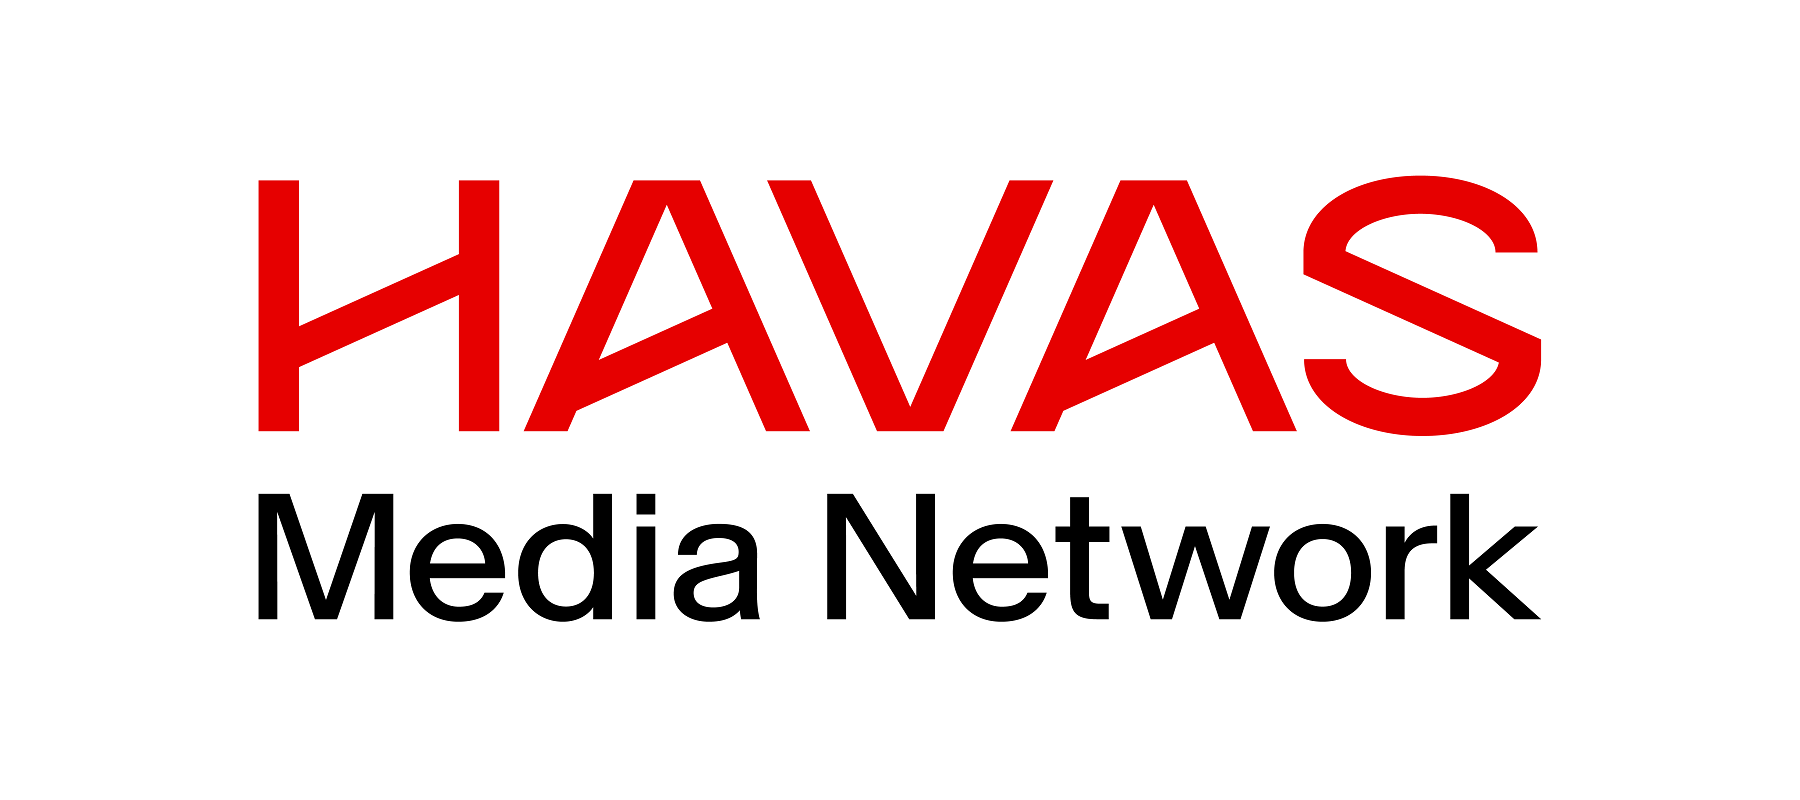 Havas Media Network named media agency partners for tourism firm Destination Vancouver